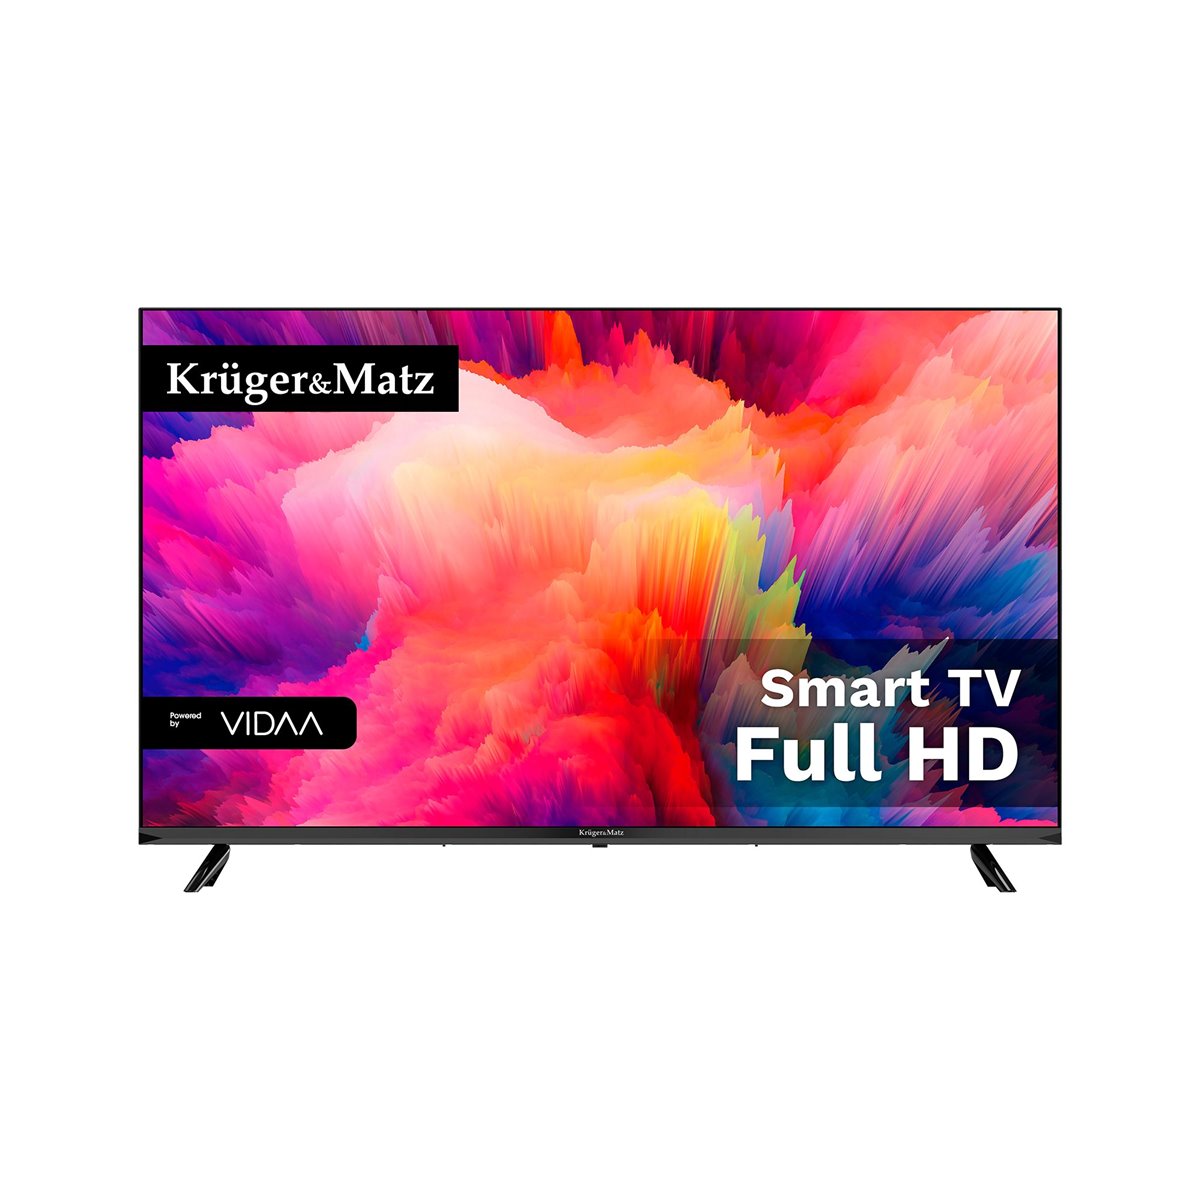 Televízor Kruger&Matz 43" (109cm) FHD, DVB-T2/C/S2 VIDAA smart